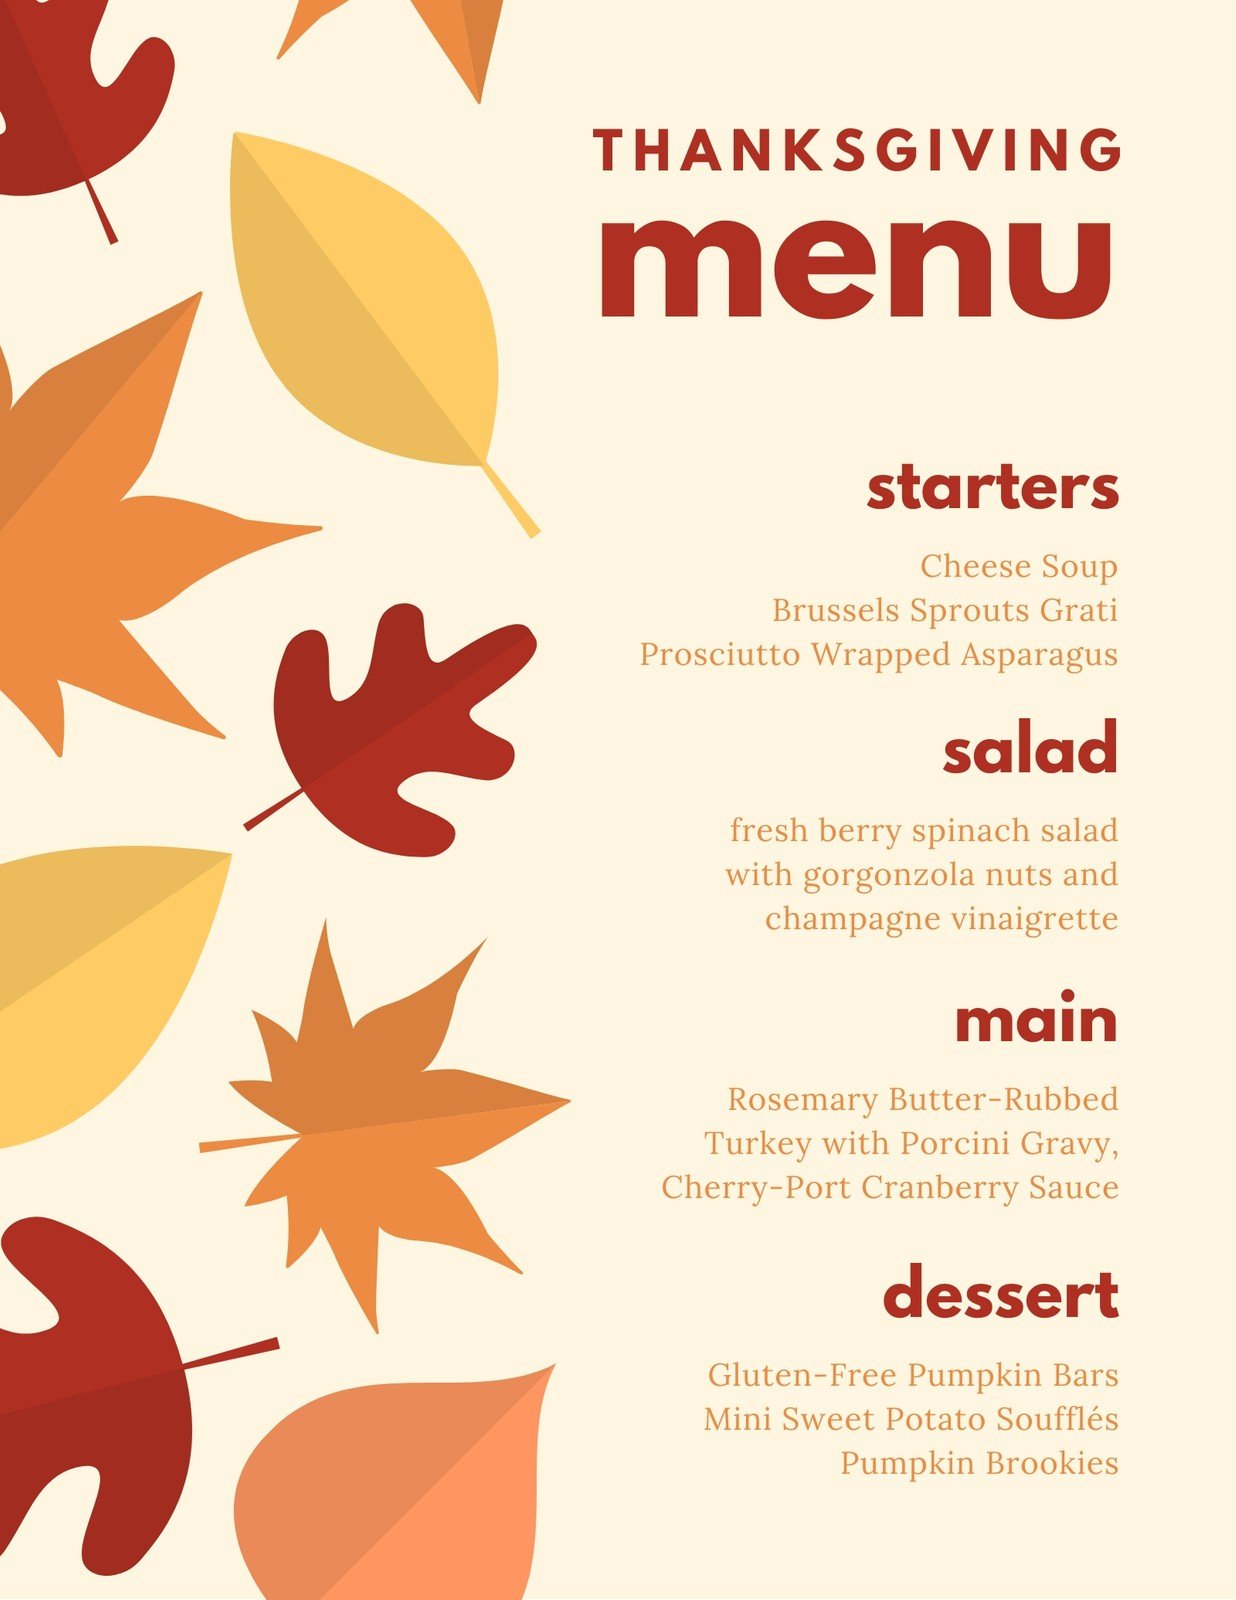 Free printable, customizable Thanksgiving menu templates  Canva Inside Thanksgiving Day Menu Template